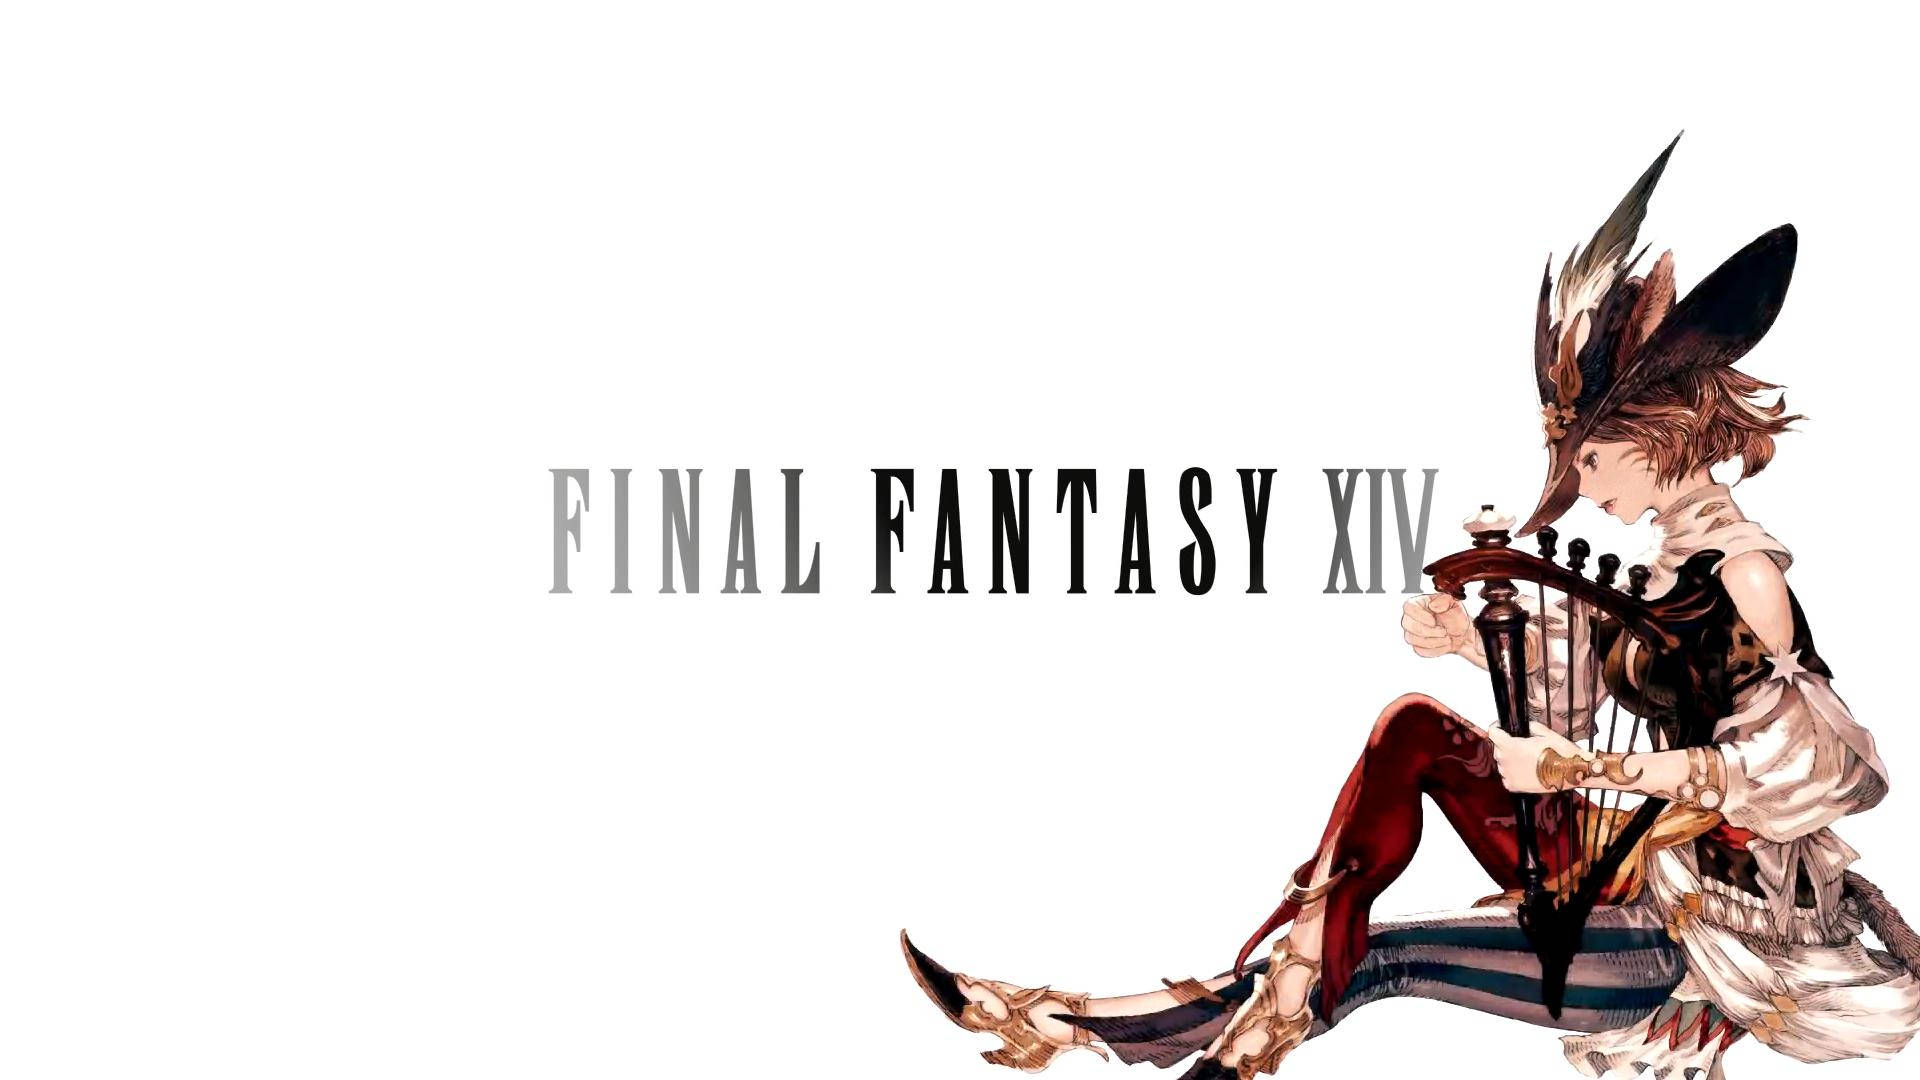 Explore the immersive world of Final Fantasy XIV! Wallpaper